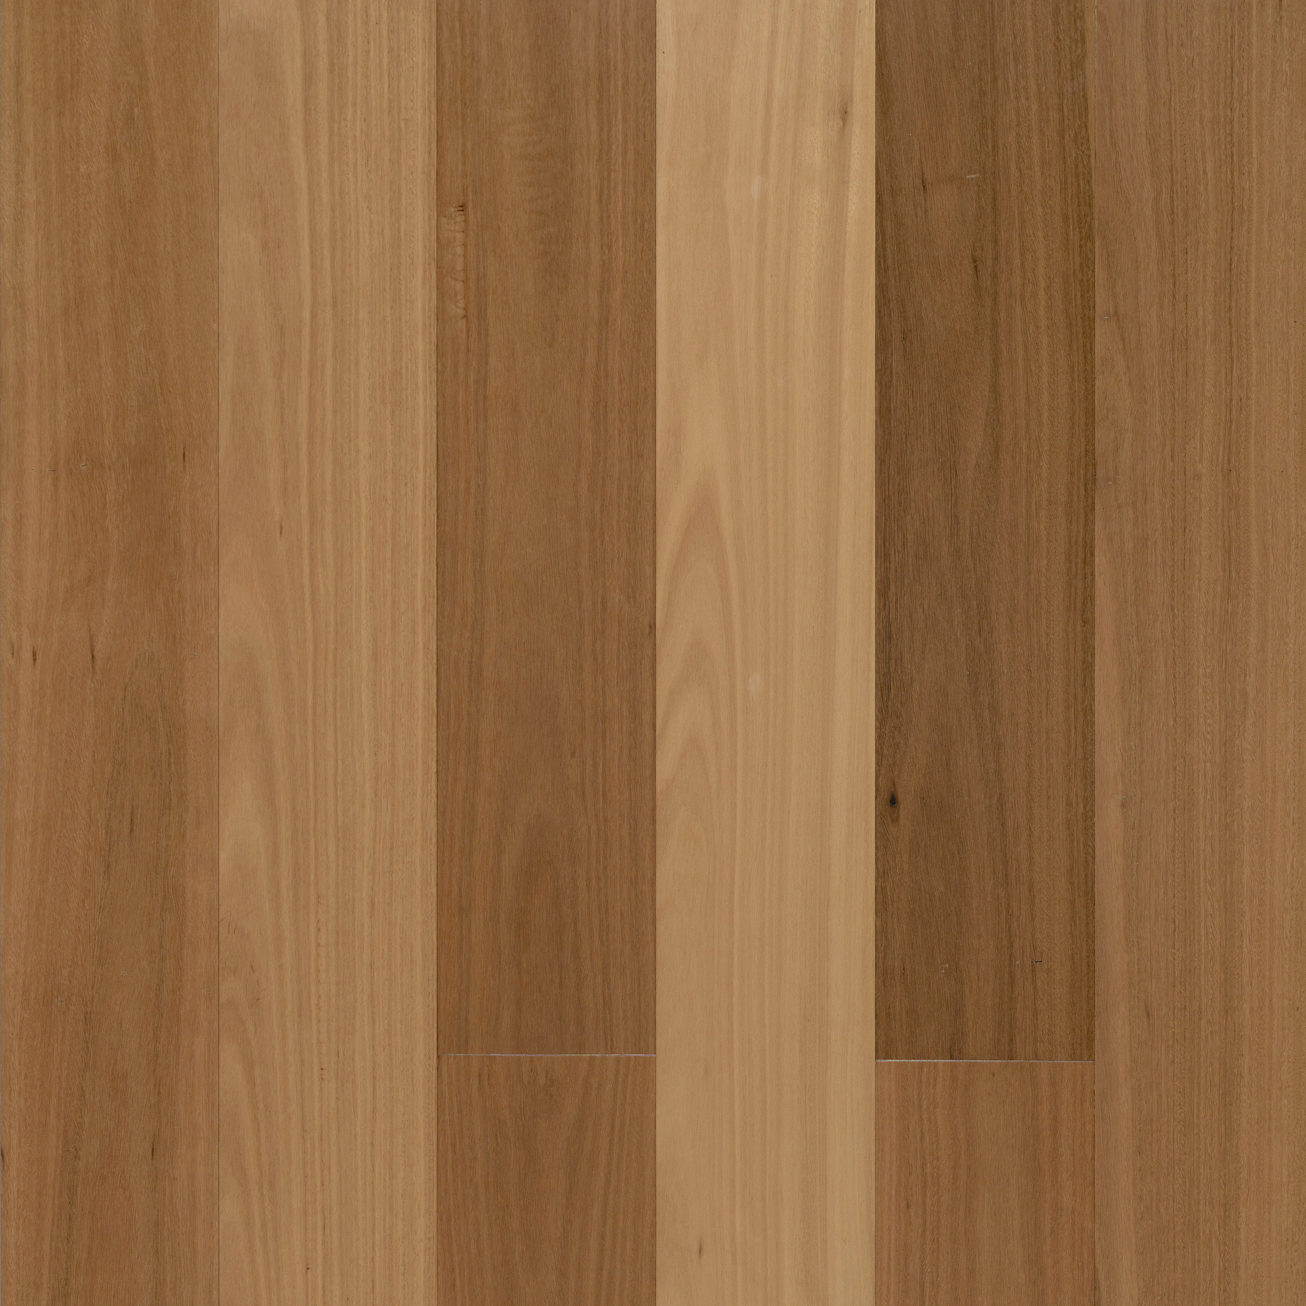 Vapor Permeability of Wood Floor Finishes